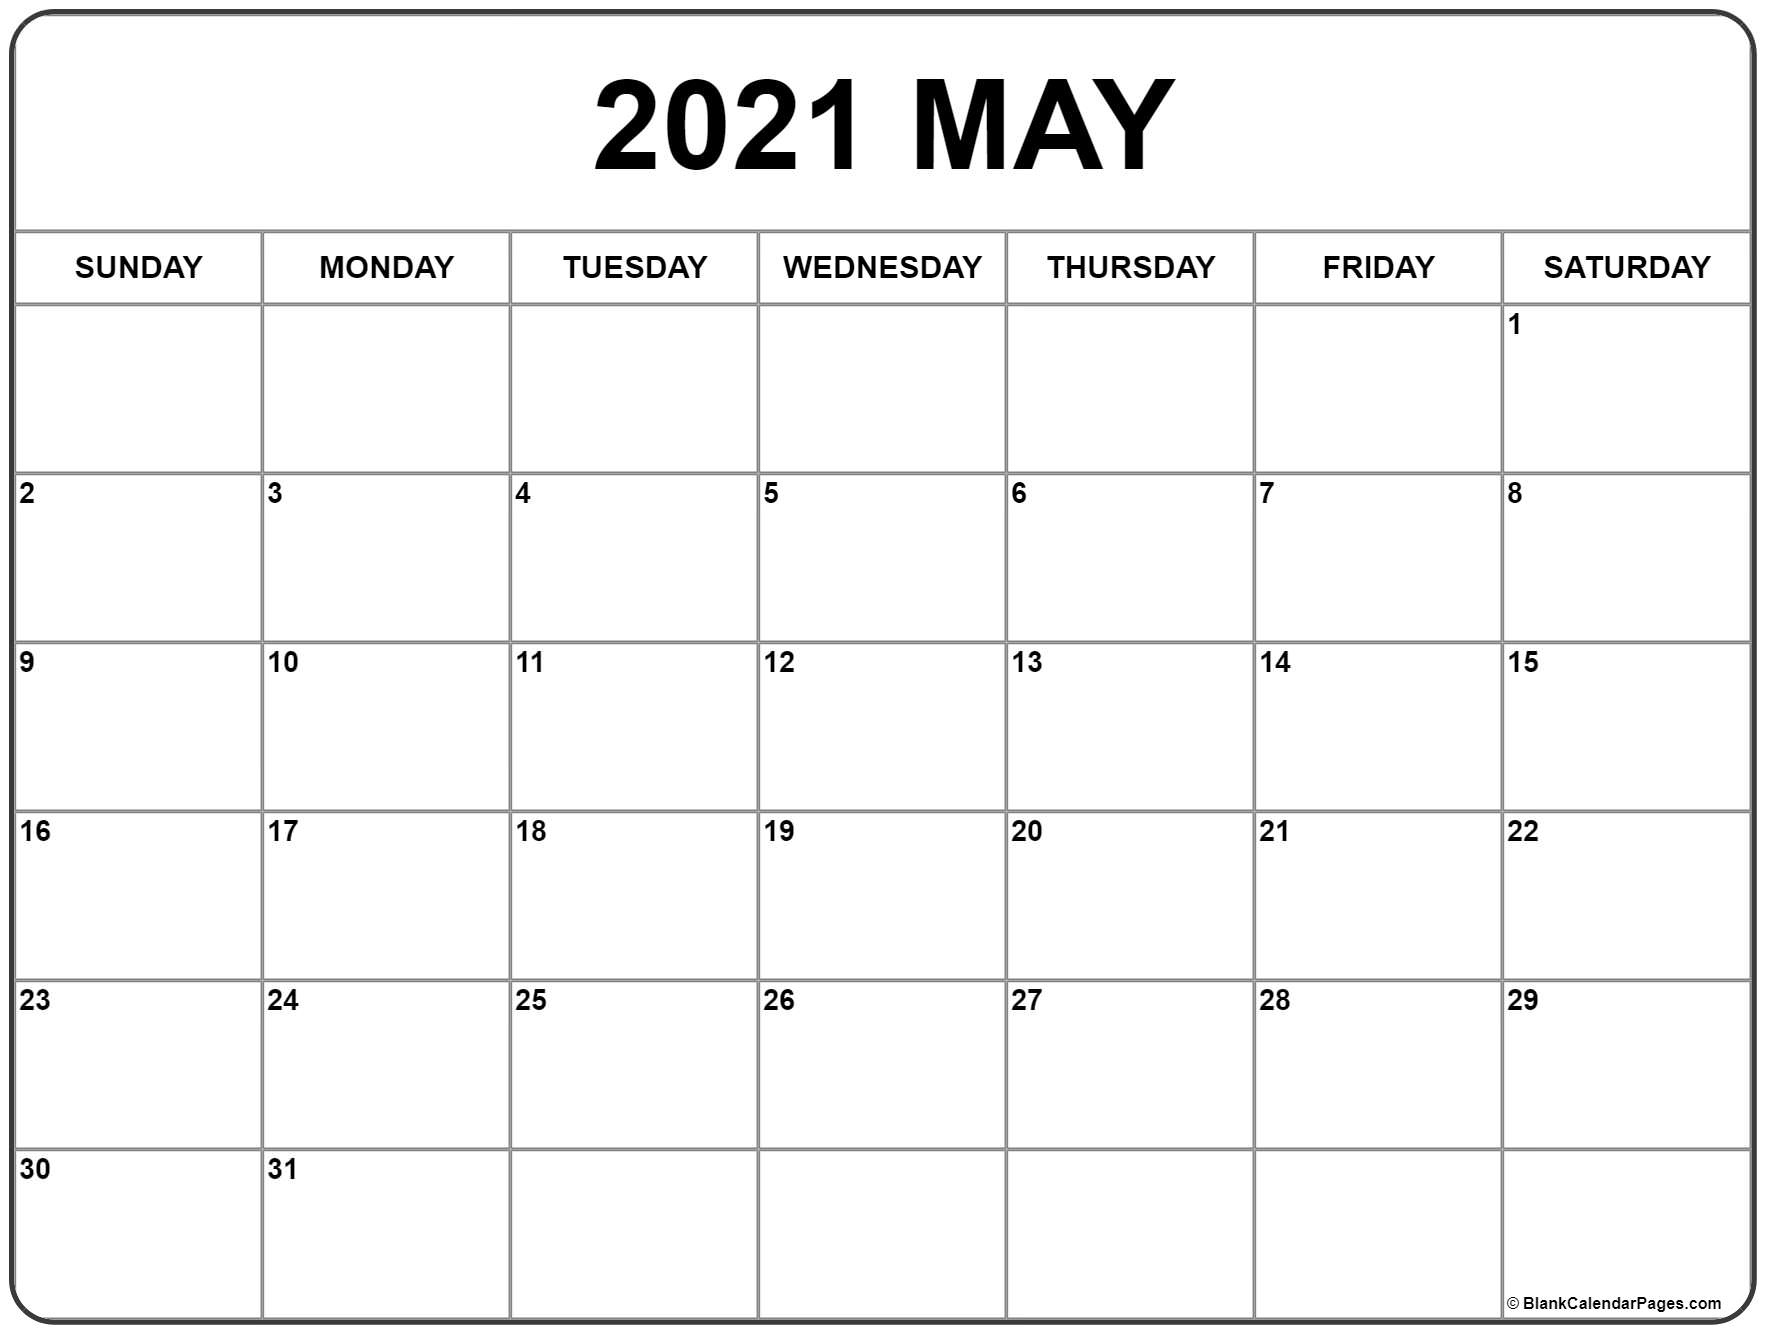 May 2021 Calendar | Free Printable Monthly Calendars Blank Monthly Calendar 2021